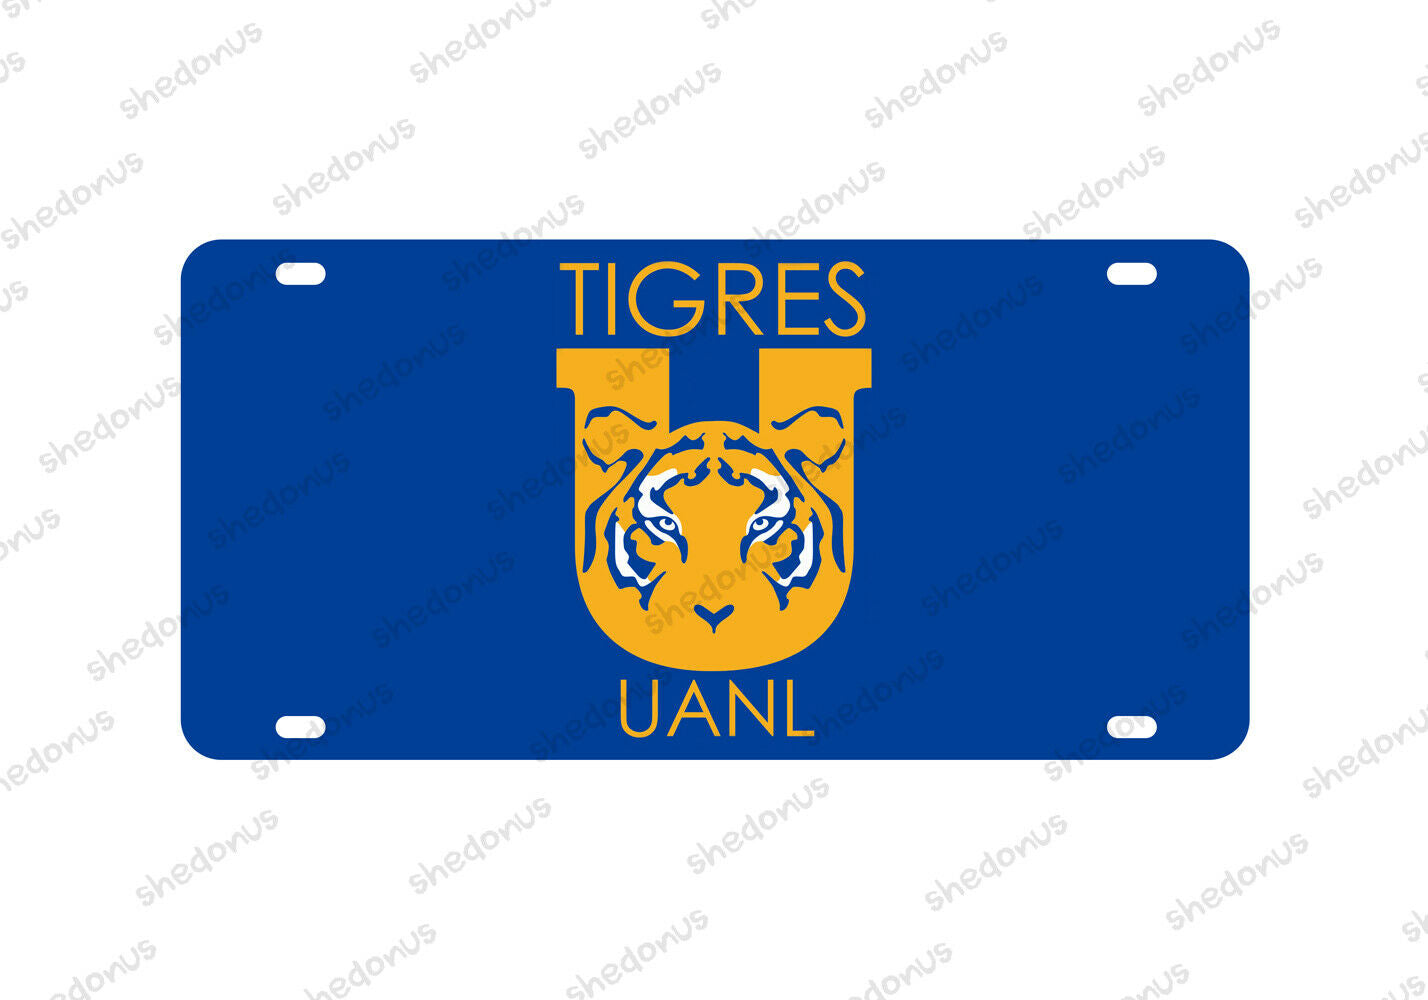 Tigres UANL Car License Plate Monterrey Mexico Acrylic Bandera Soccer